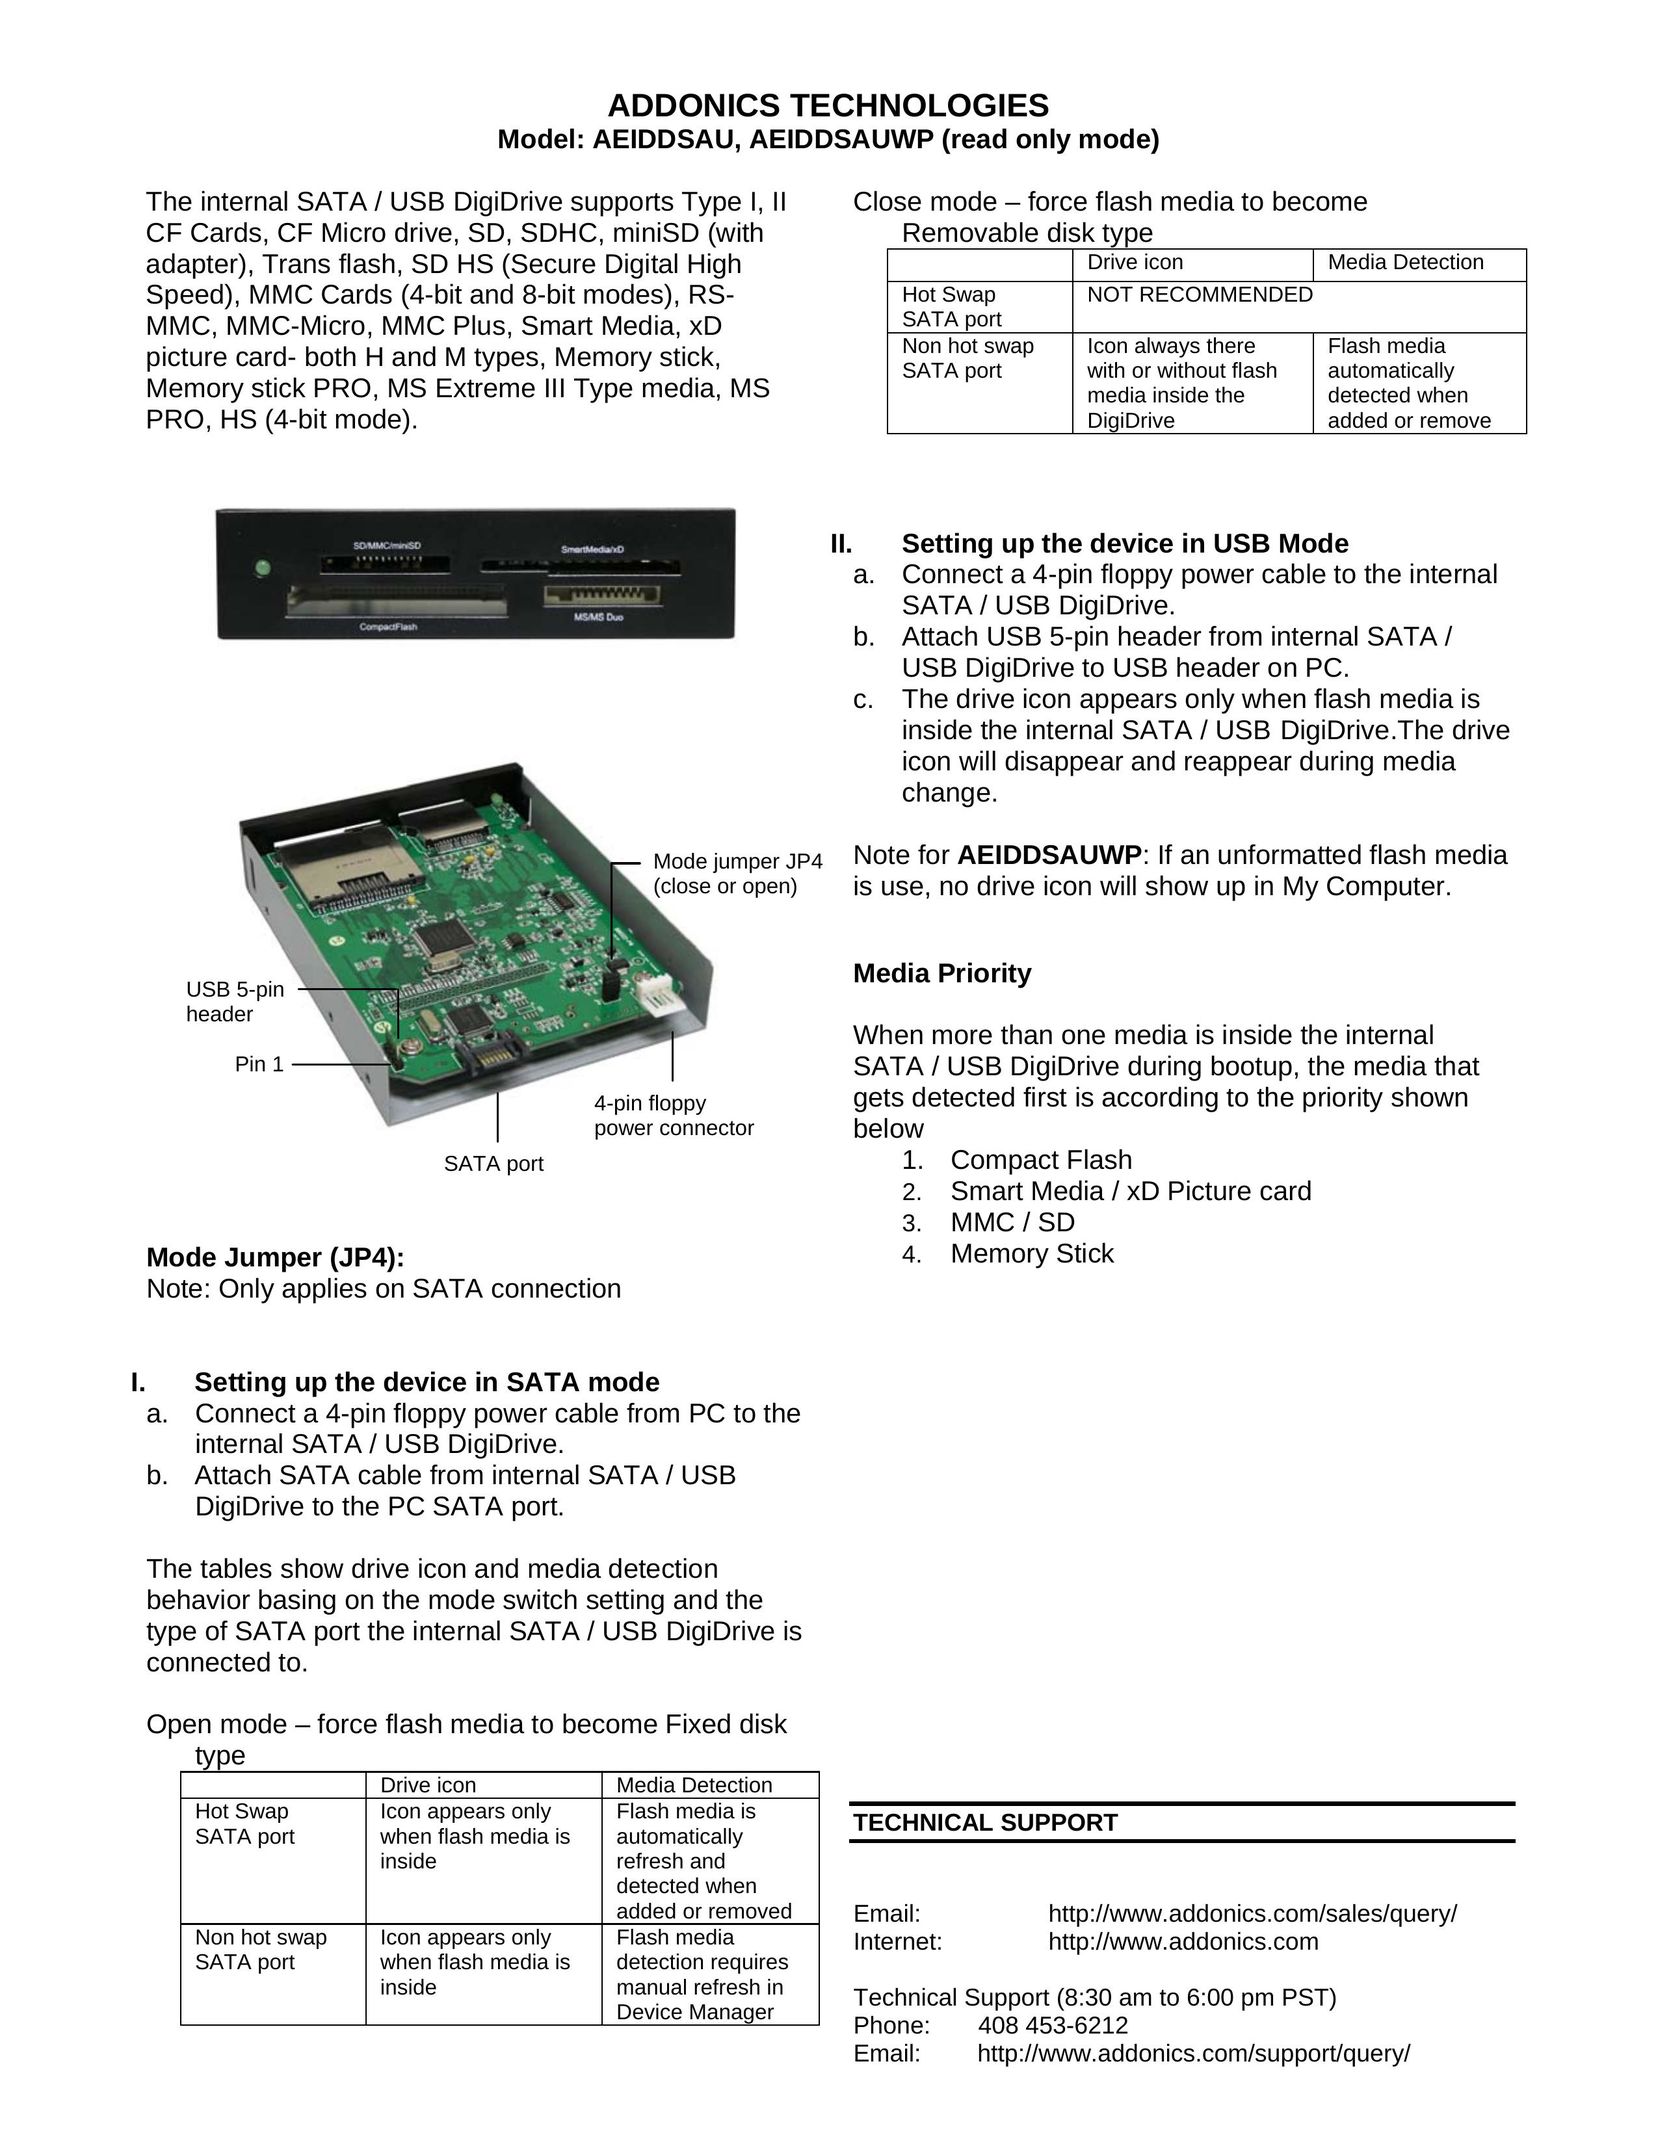 Addonics Technologies AEIDDSAUWP Computer Drive User Manual